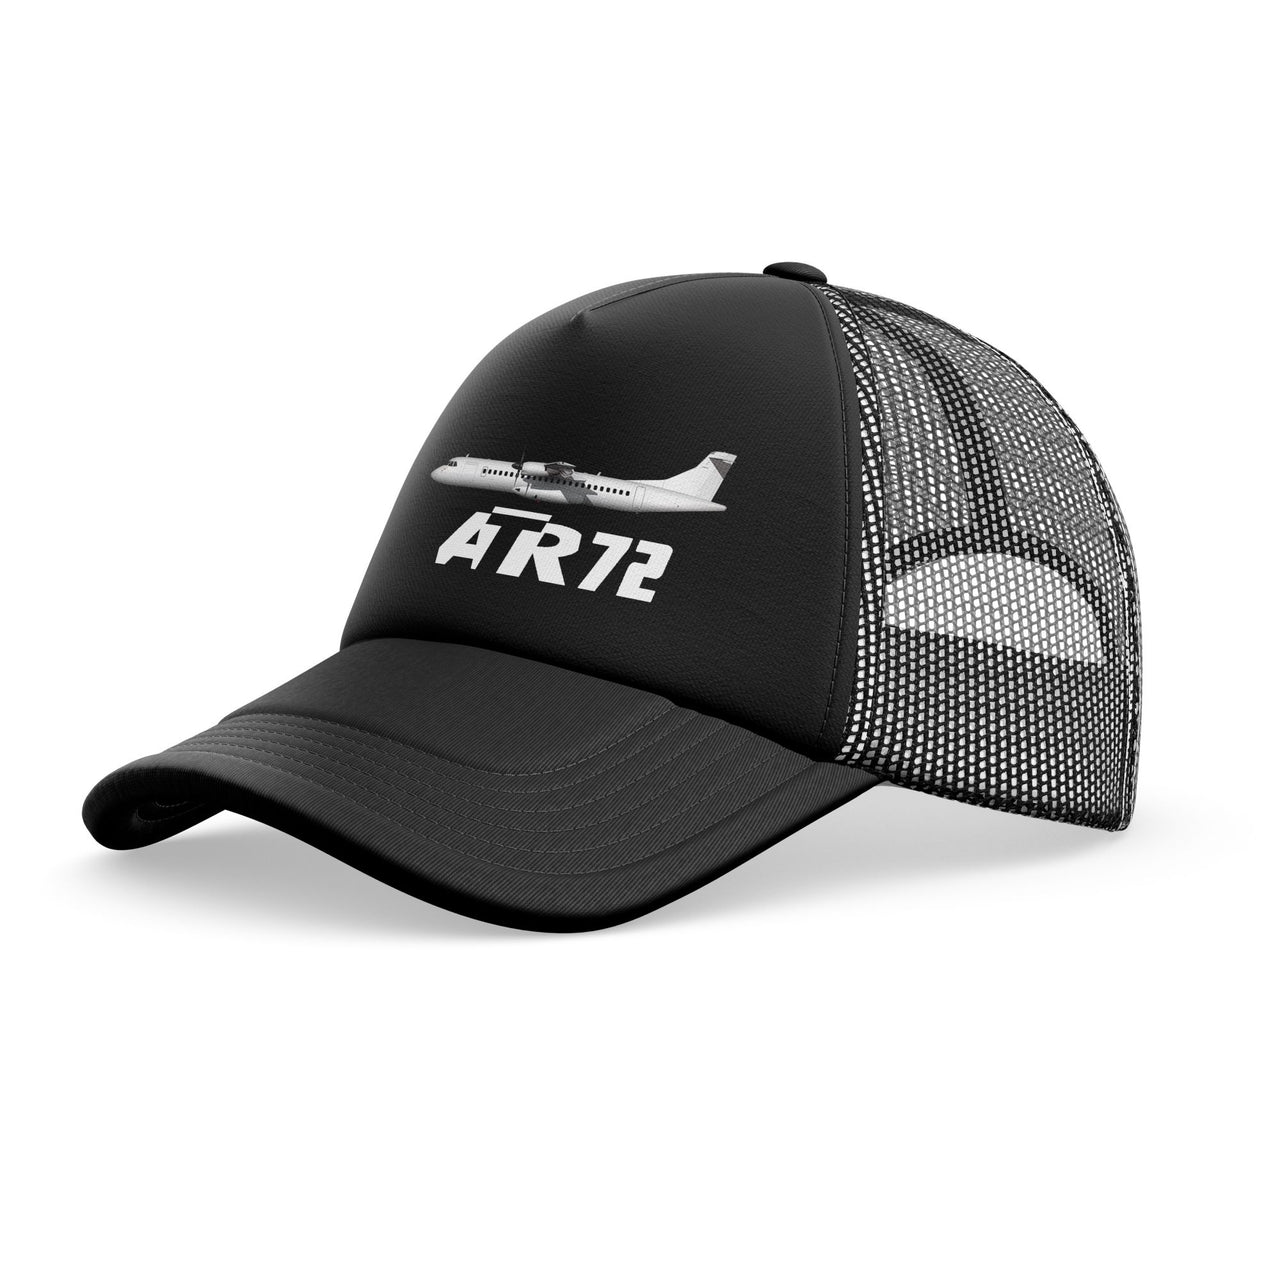 The ATR72 Designed Trucker Caps & Hats